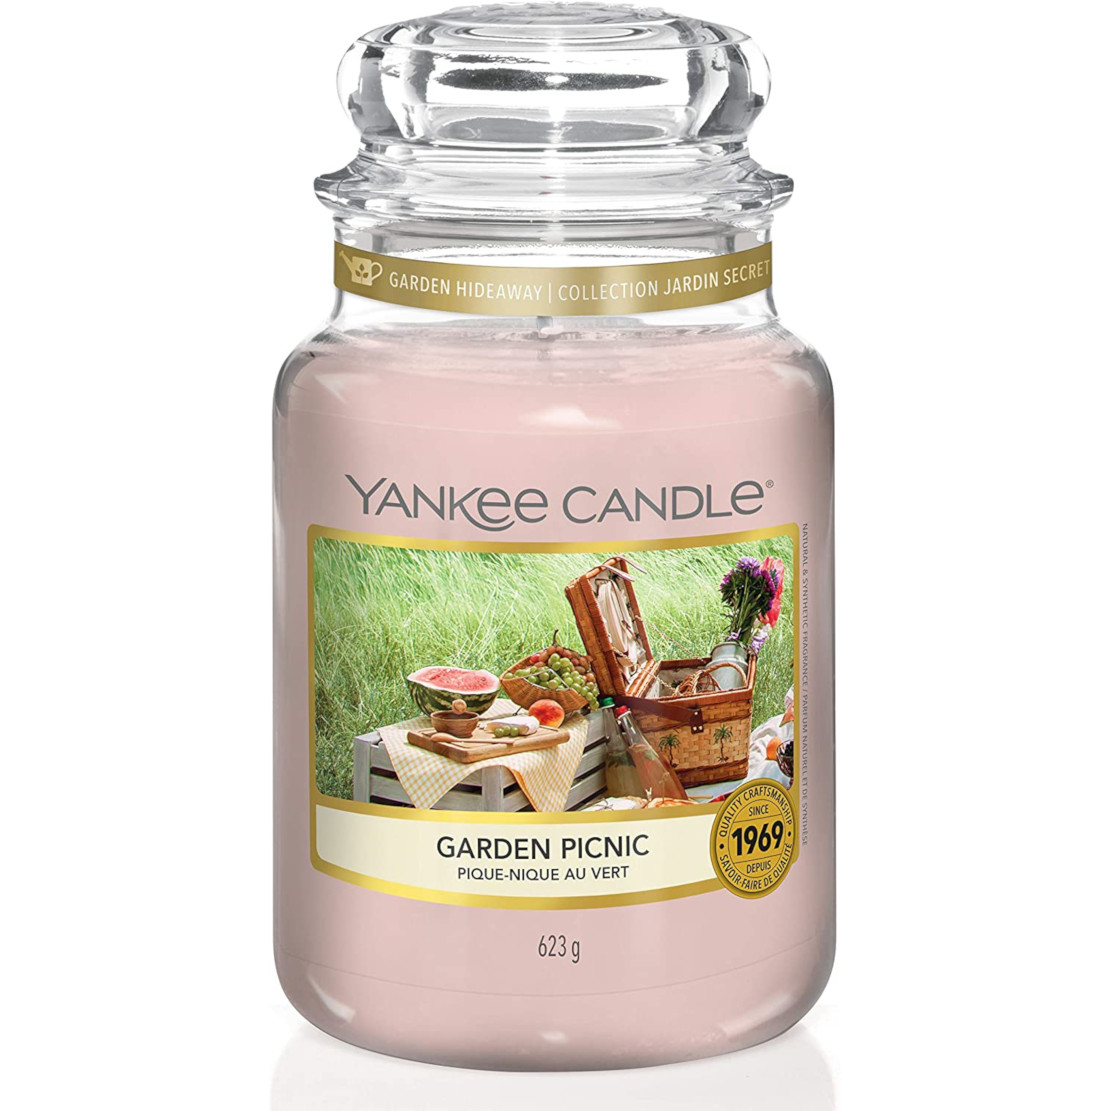 Yankee Candle Garden Picnic Large Jar